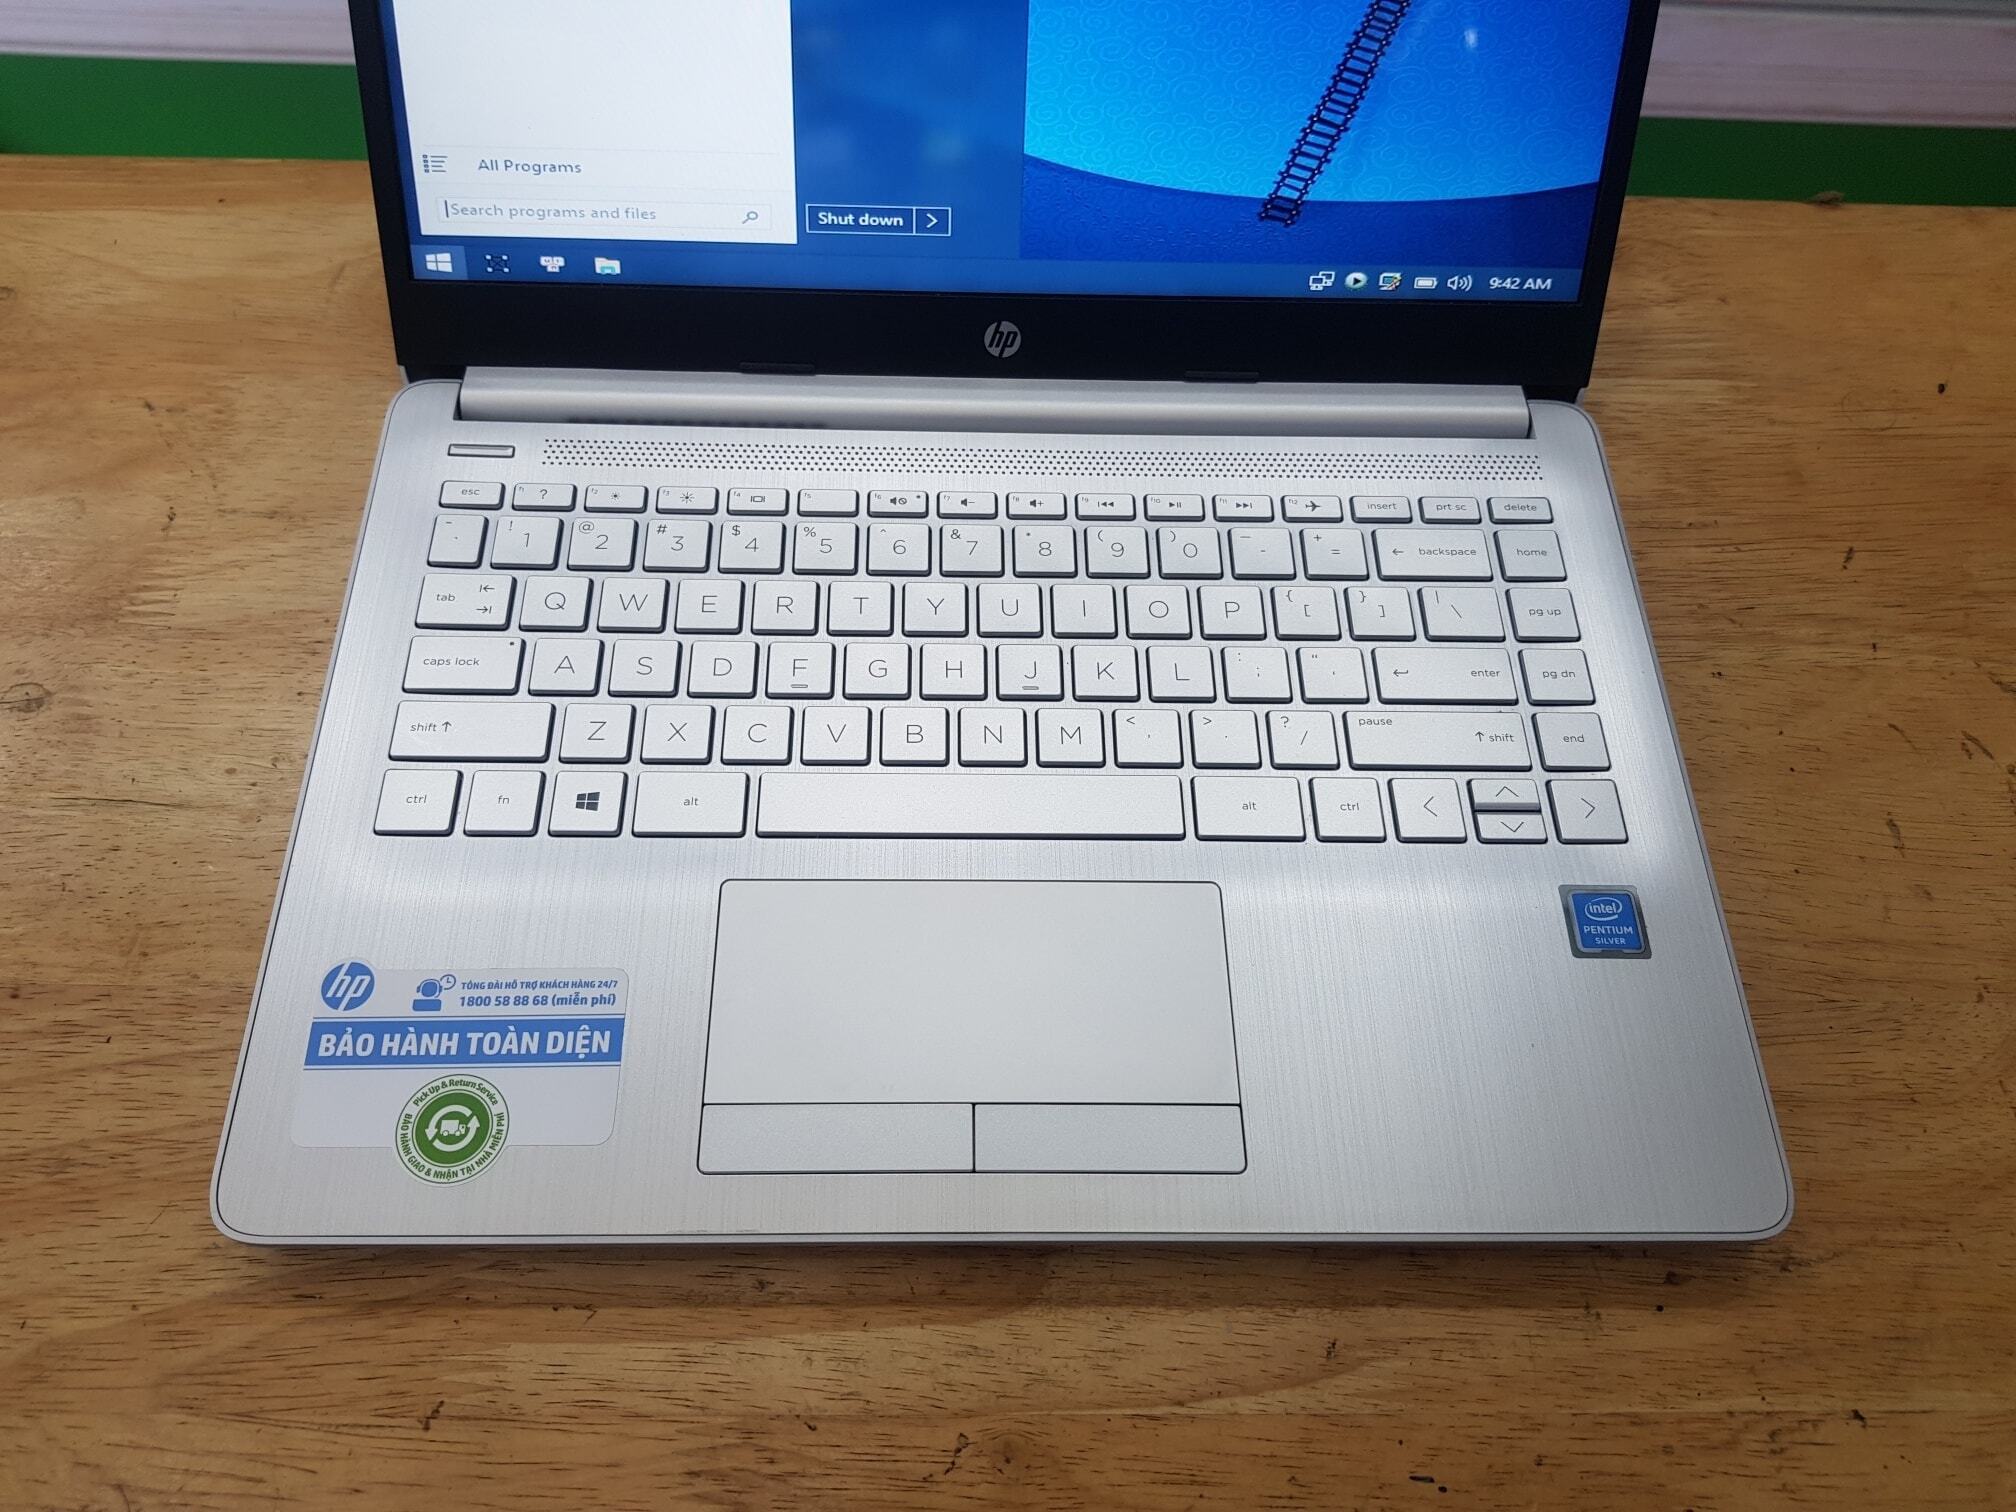 Laptop HP 14s-cf0096TU 6ZF41PA - Intel Pentium Silver N5000, 4GB RAM, HDD 1TB, Intel UHD Graphics 605, 14 inch